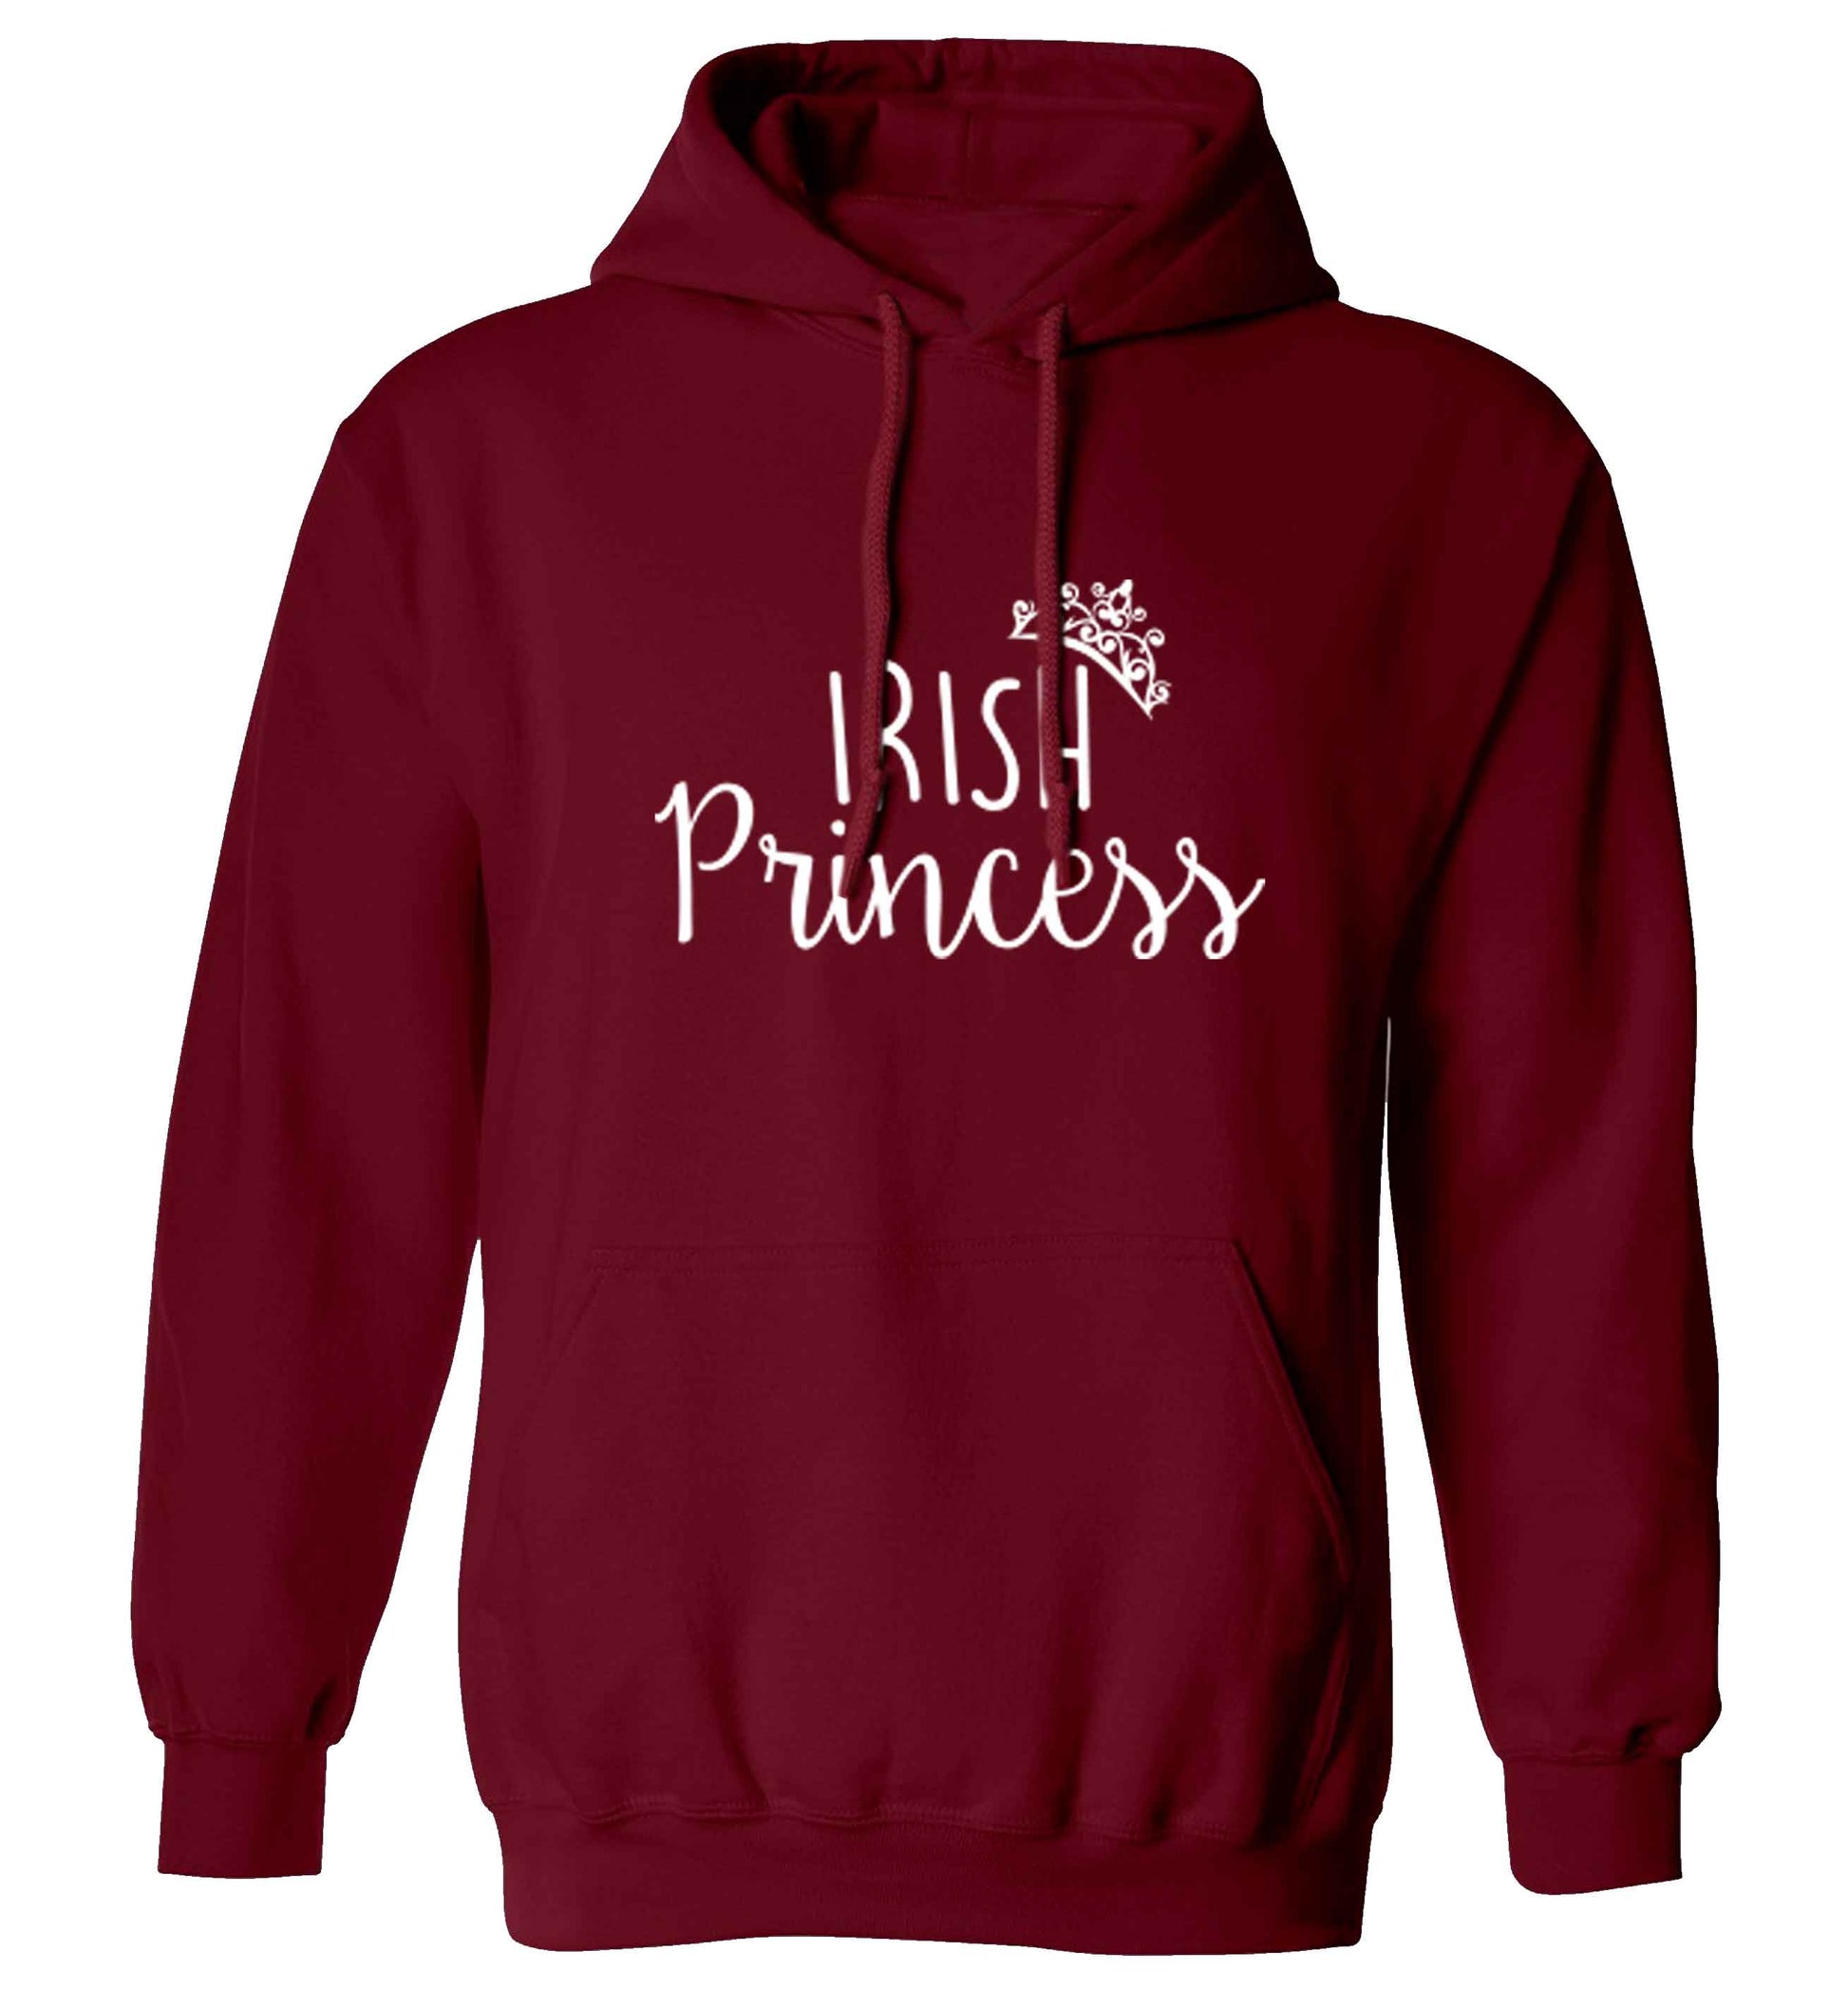 Irish princess adults unisex maroon hoodie 2XL